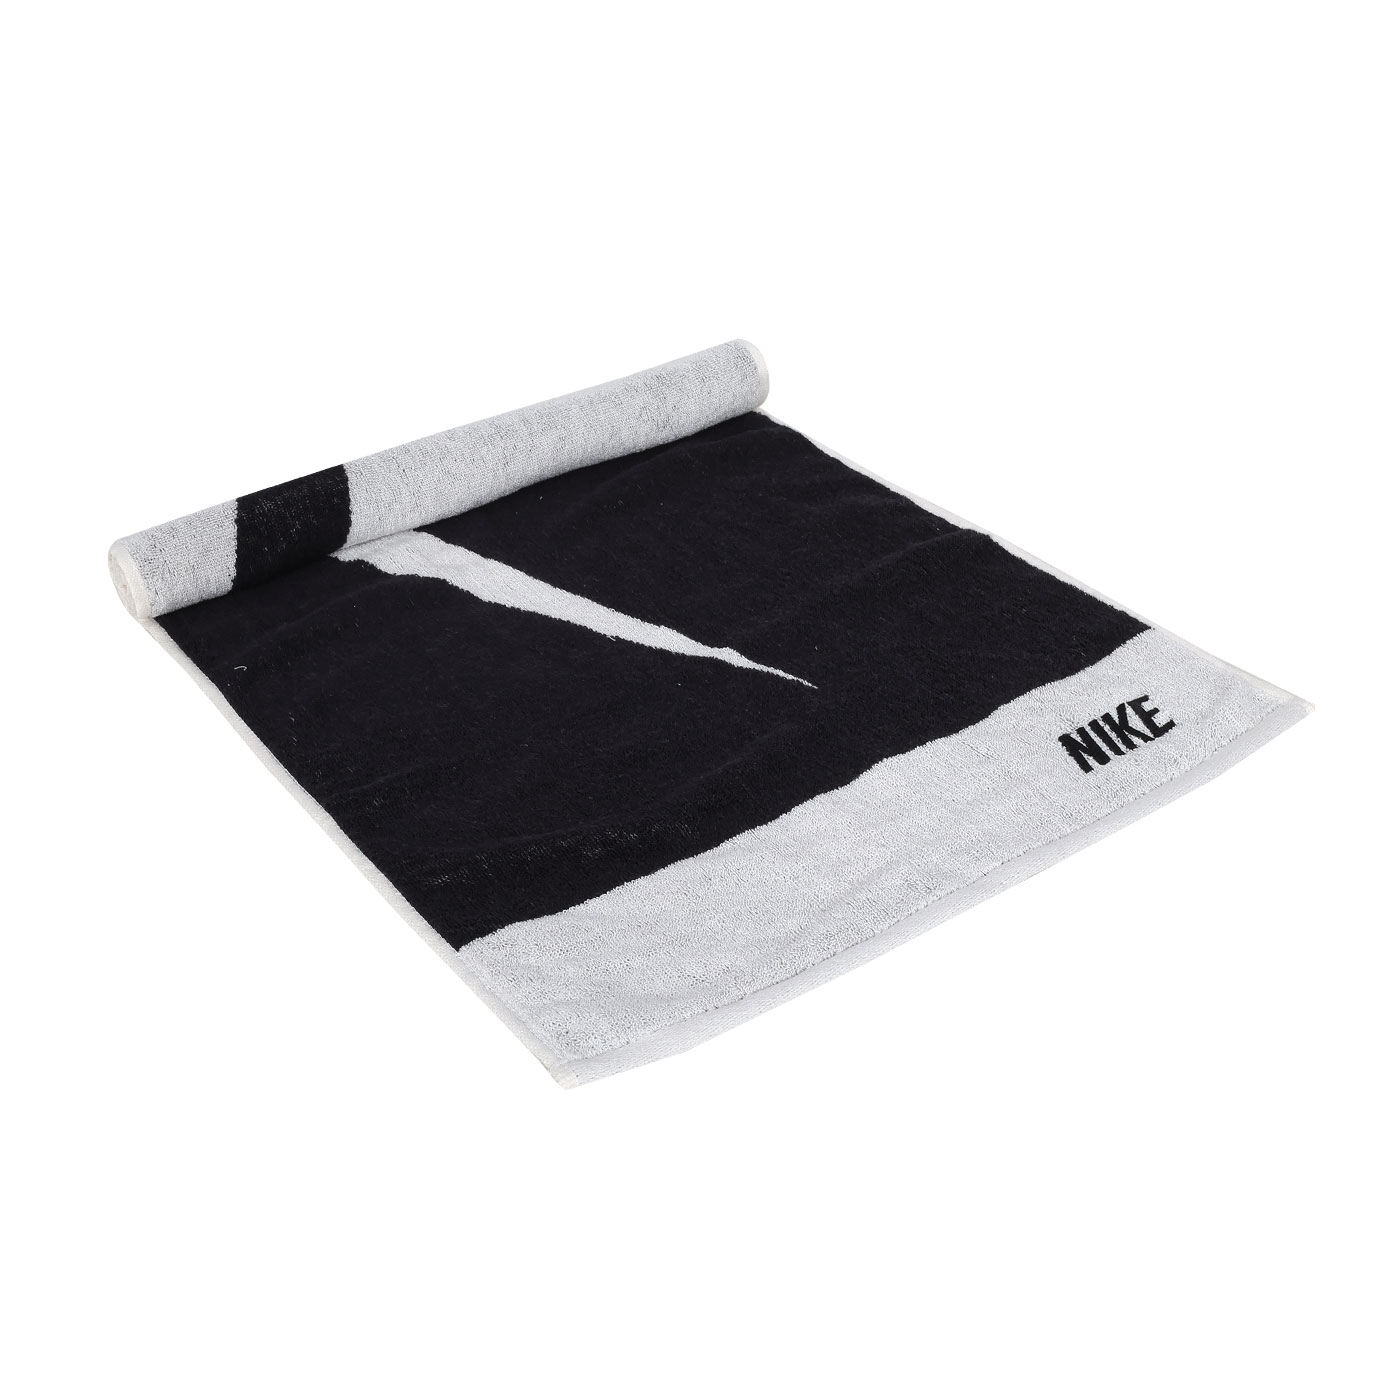 NIKE JACQUARD 毛巾(80x35cm)  N1001539189MD - 黑白